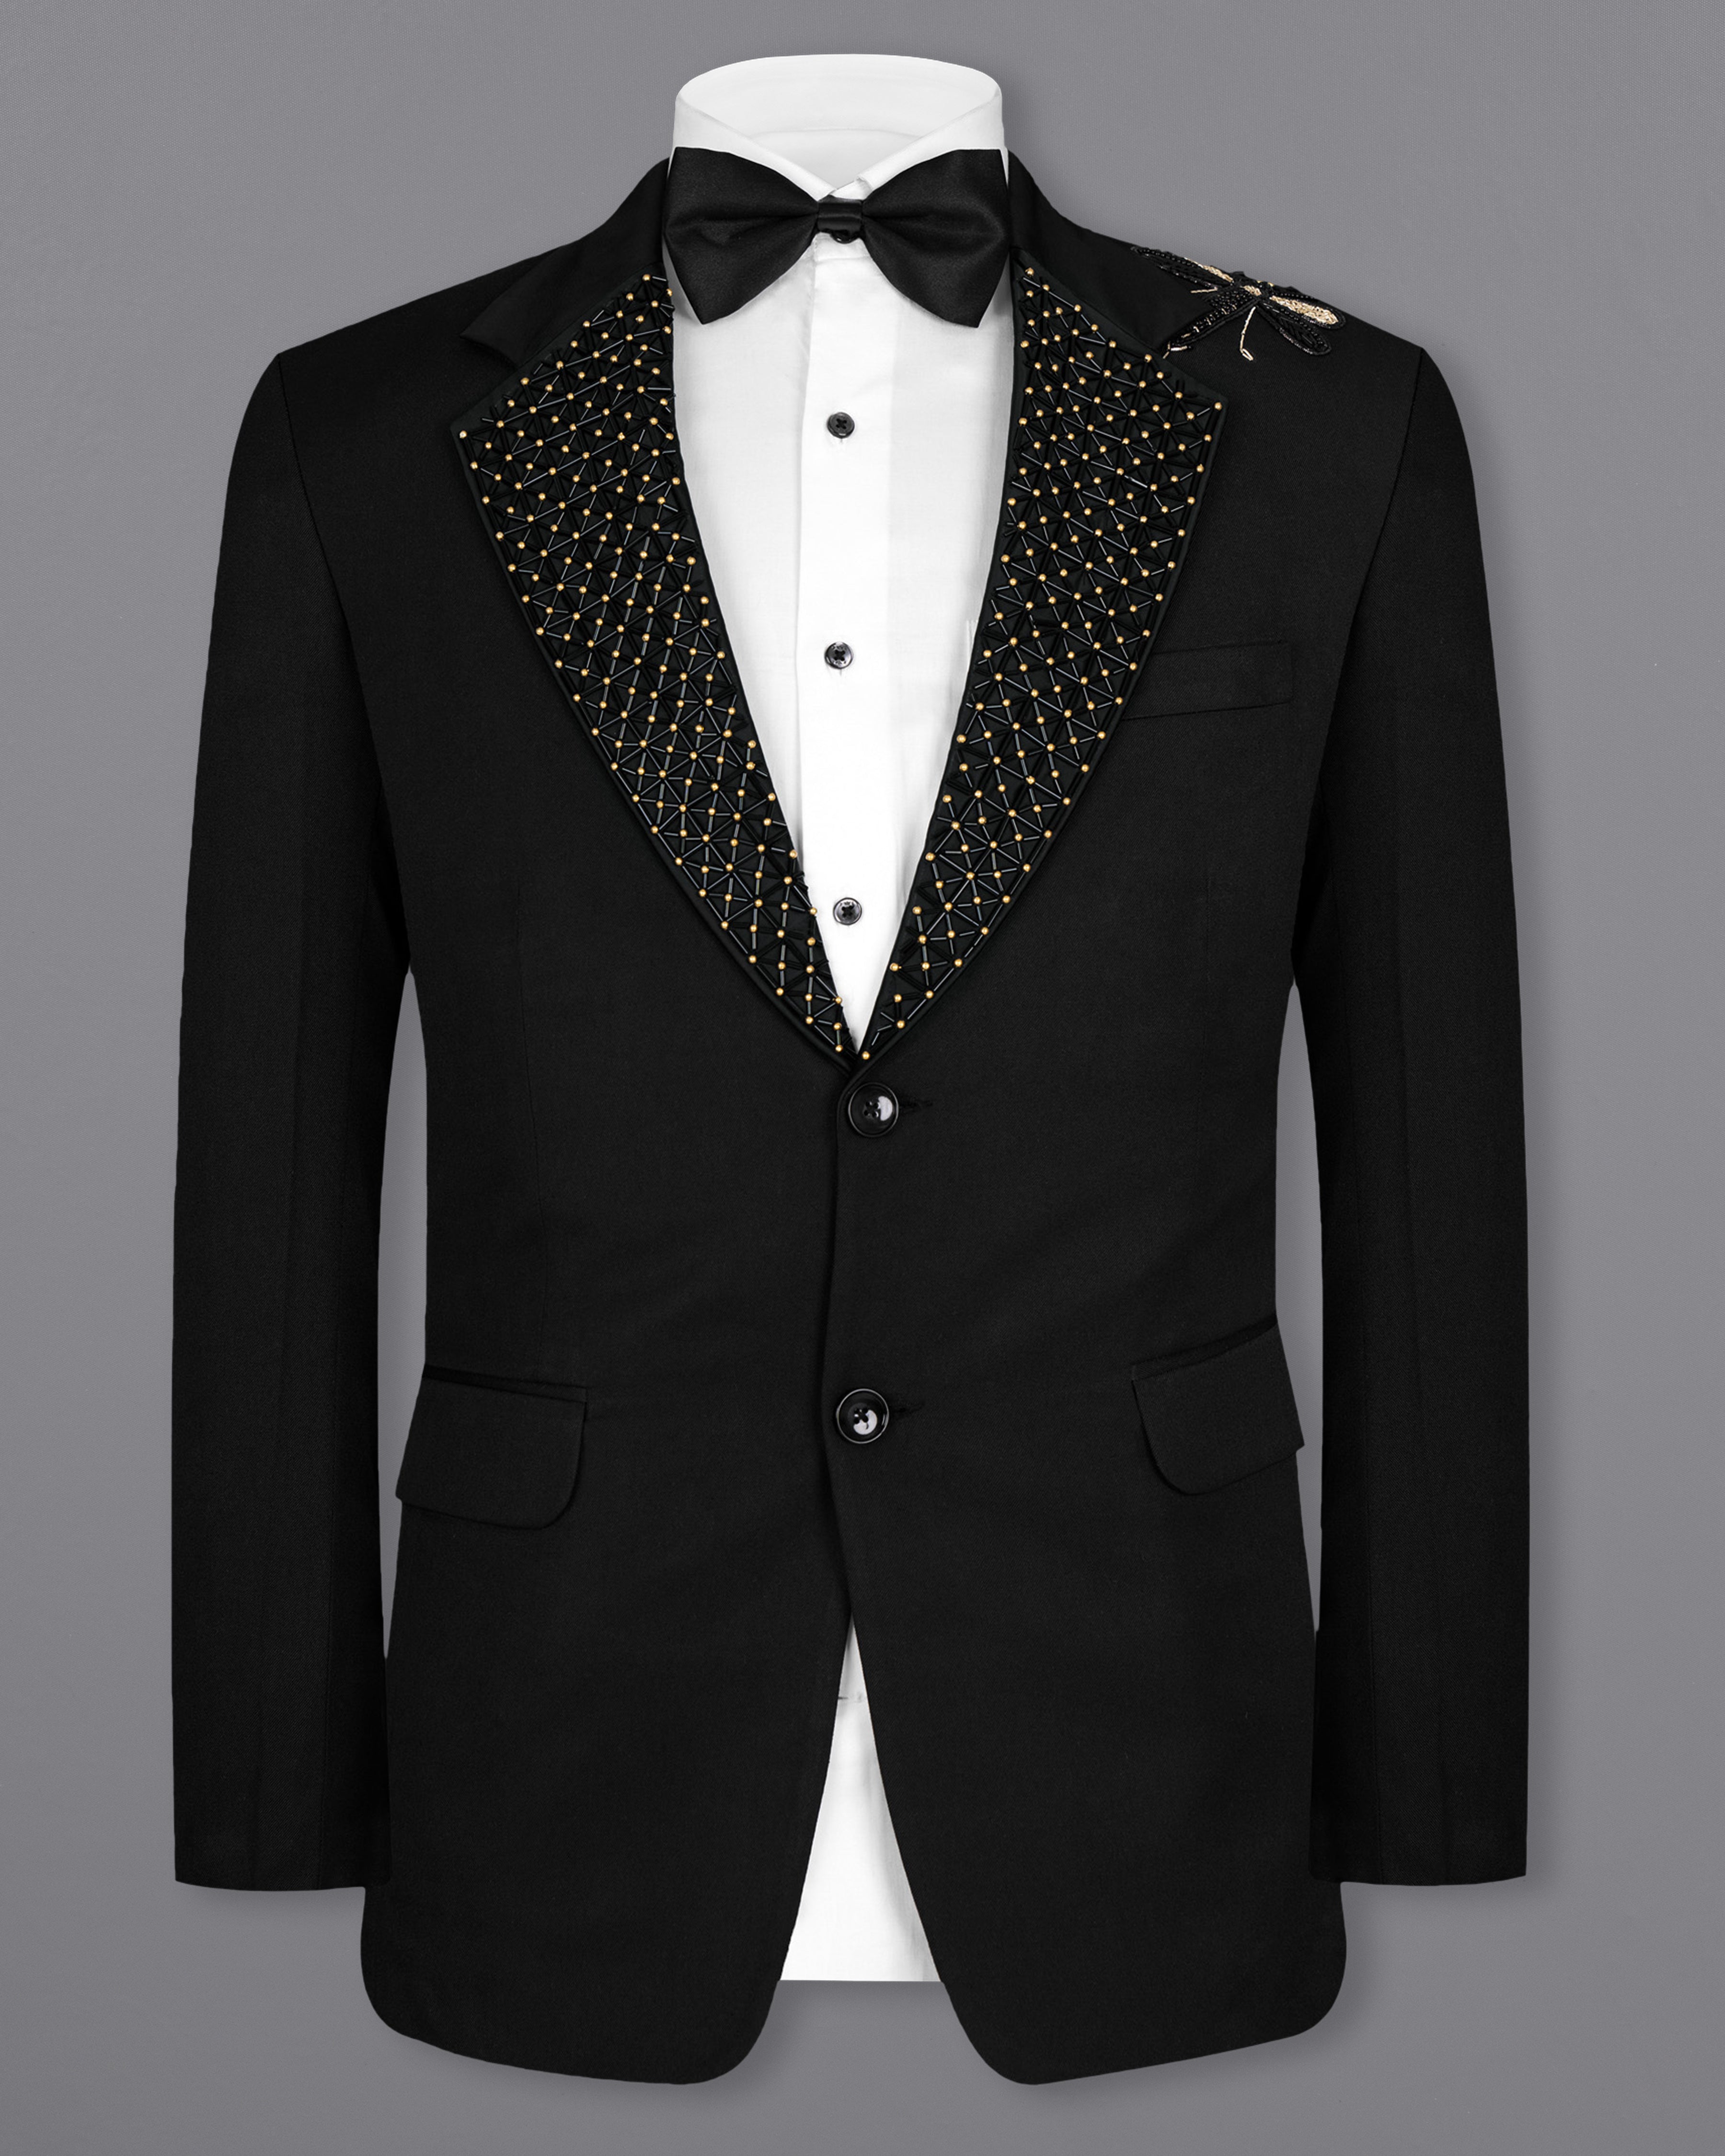 Buy Men Smoking Jacket Maroon New Elegant Luxury Tuxedo Jacket Online in  India 